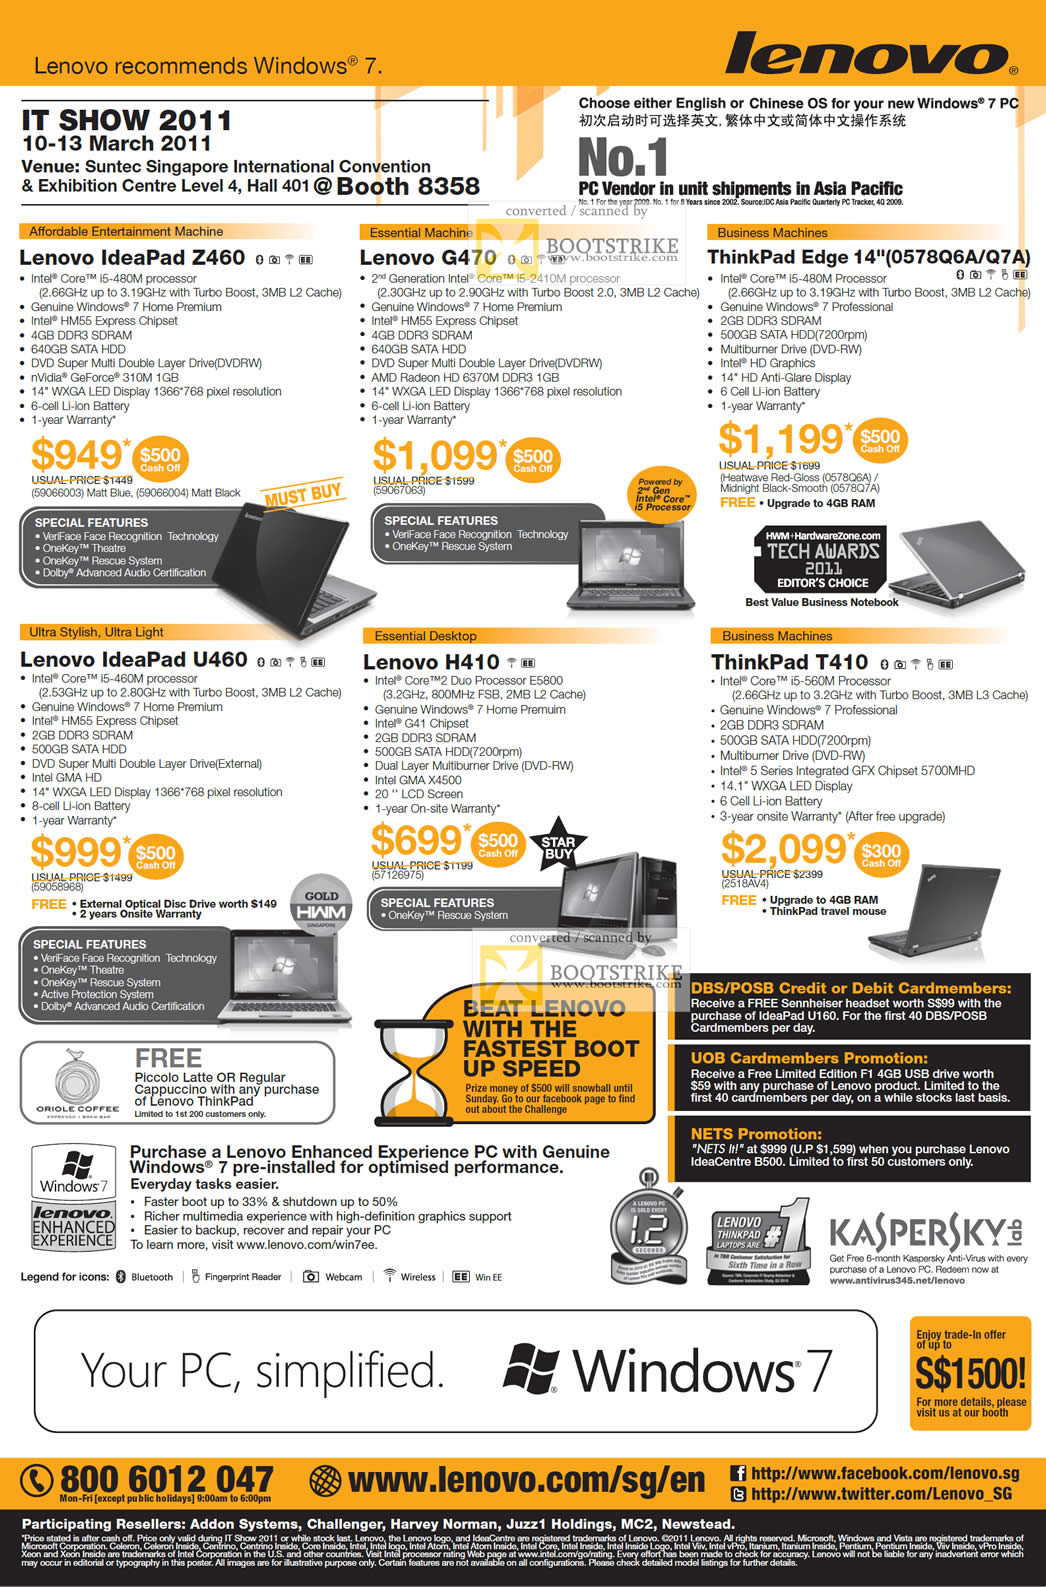 IT Show 2011 price list image brochure of Lenovo Notebooks IdeaPad Z460 G470 Thinkpad Edge 14 U460 H410 T410